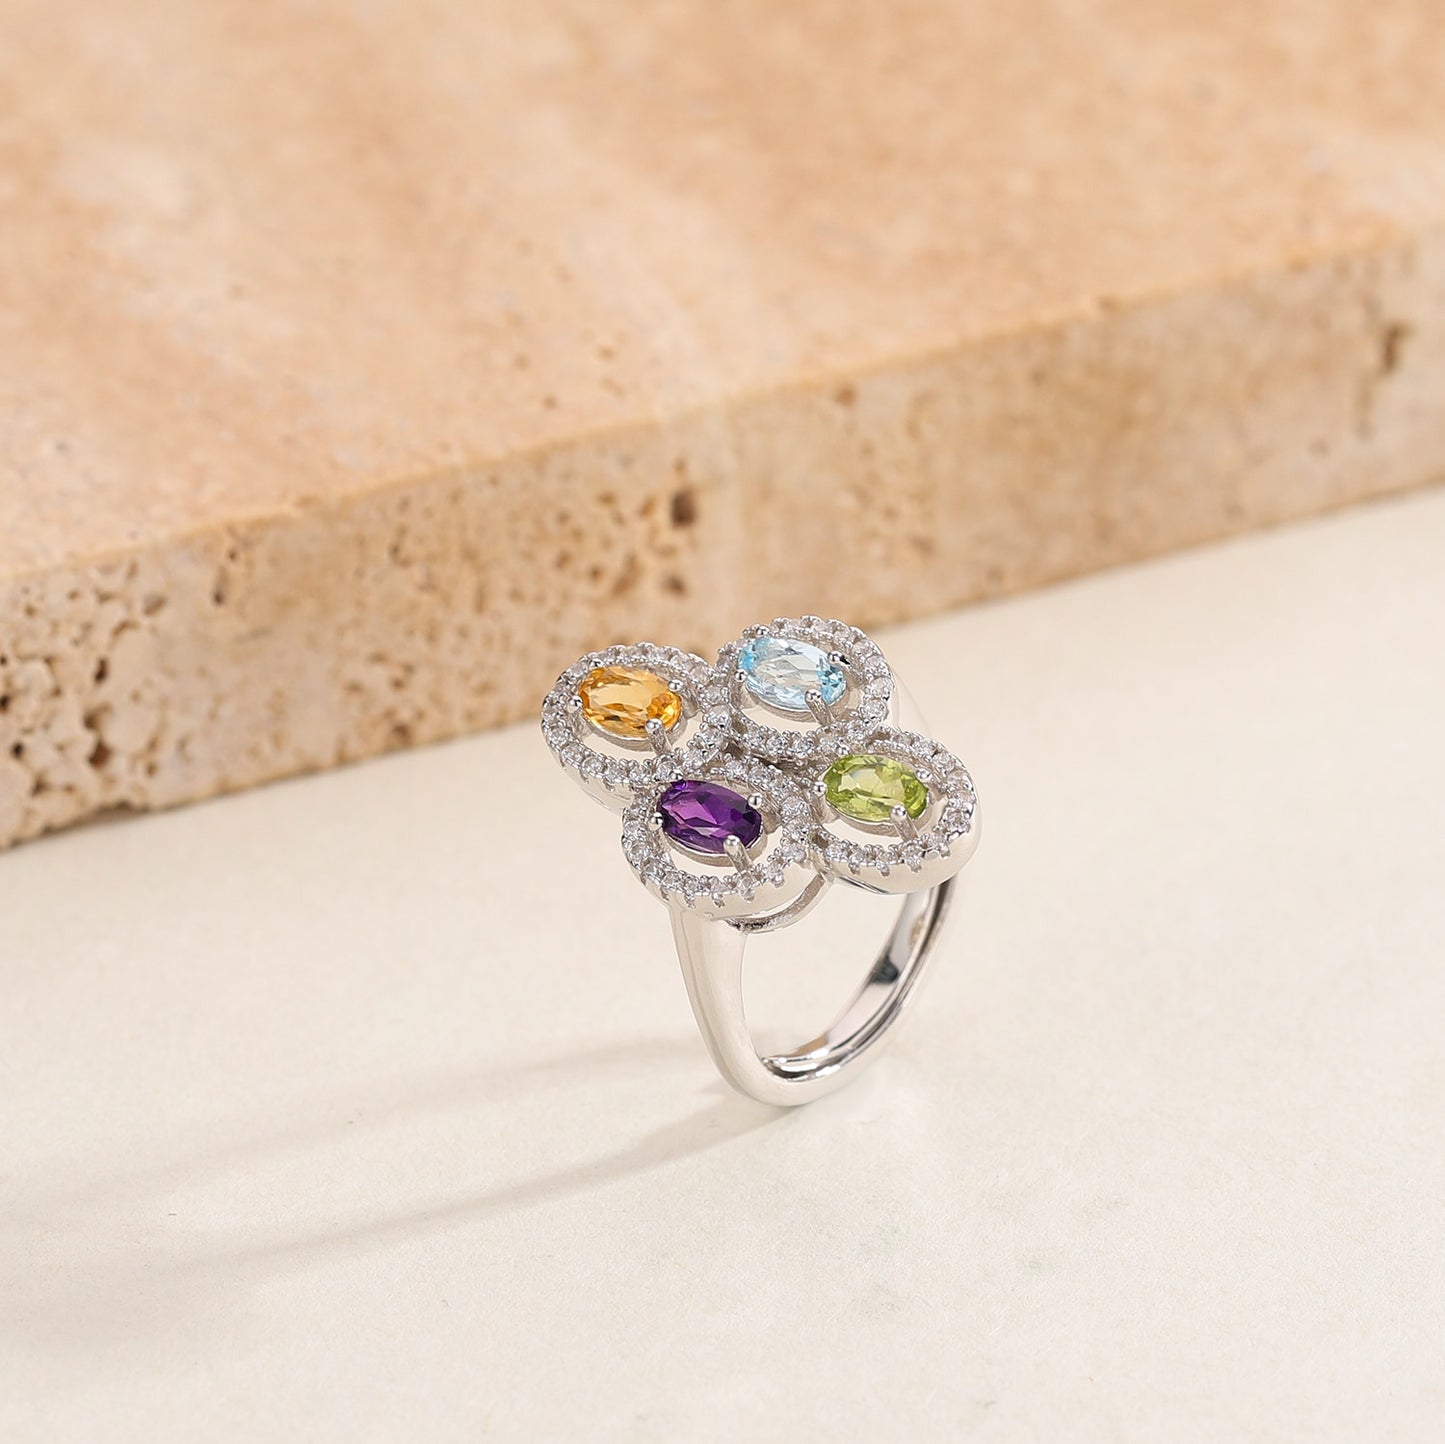 GEM&#39;S BALLET Clover Flower Ring Natural Amethyst Peridot Topaz Citrine Birthstone Ring in 925 Sterling Silver Gift For Her